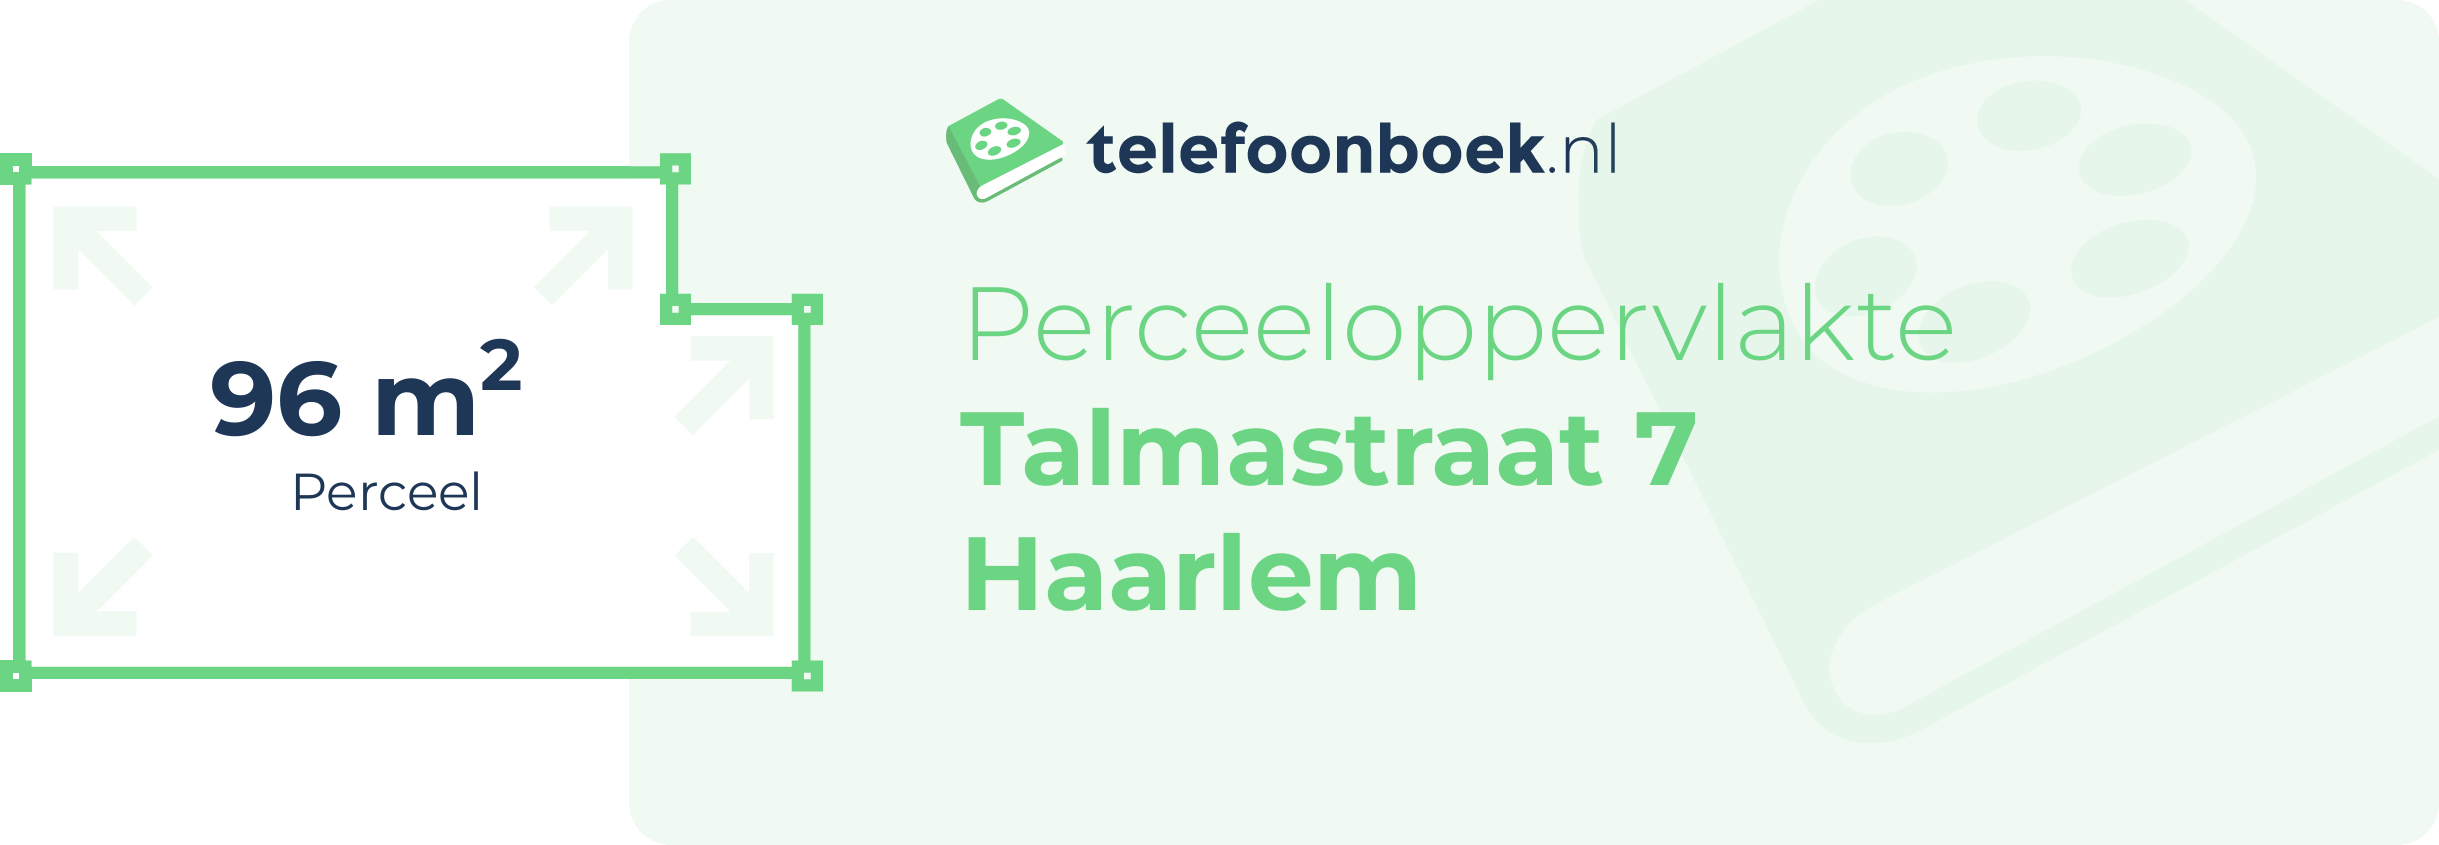 Perceeloppervlakte Talmastraat 7 Haarlem